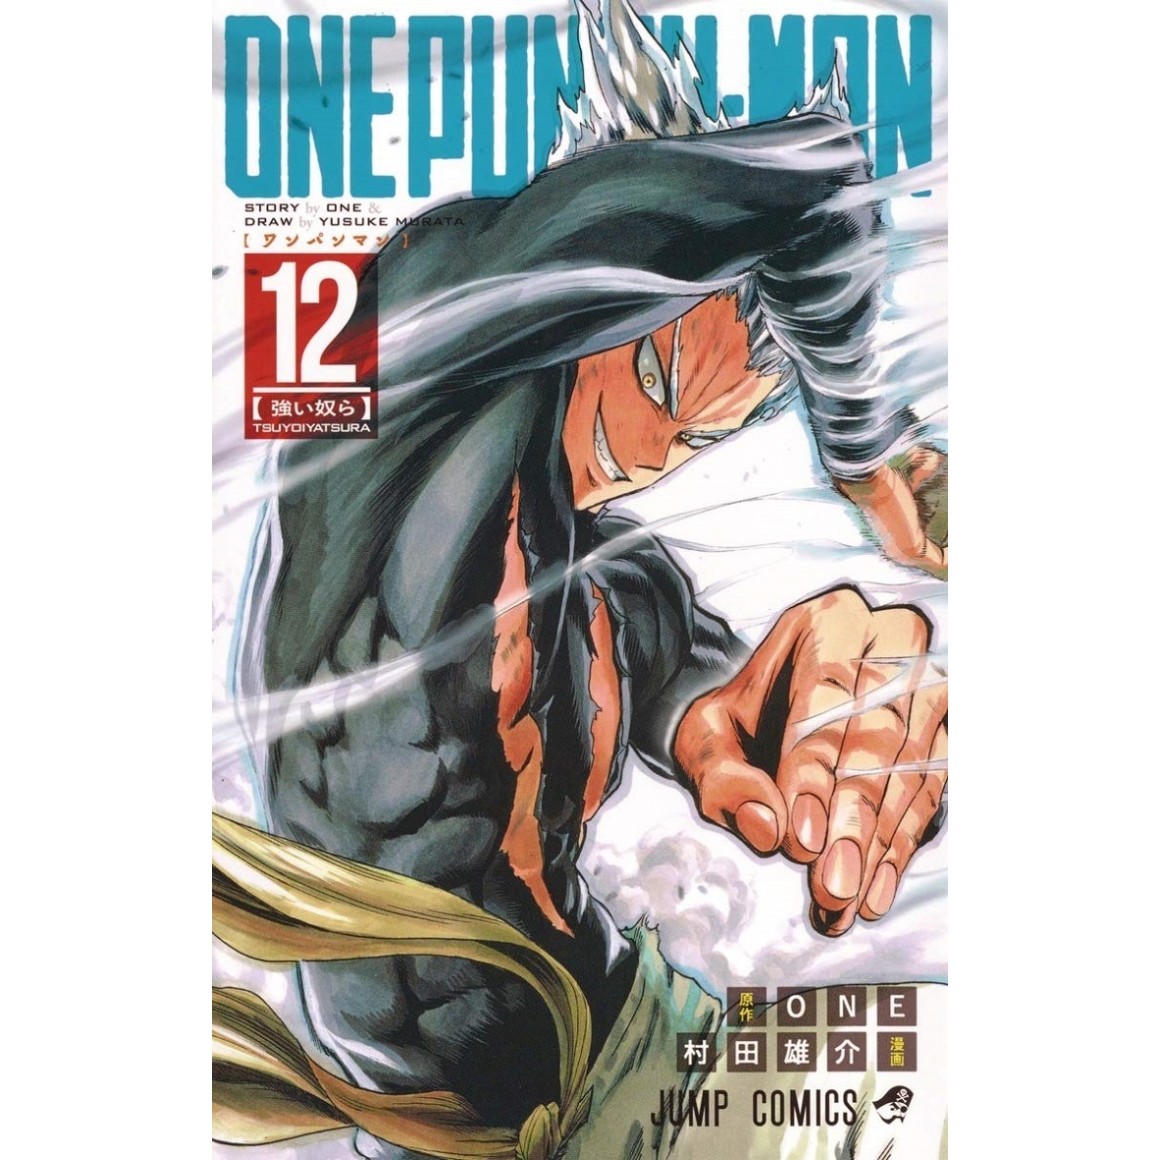 One-Punch Man, Vol. 21, Book by ONE, Yusuke Murata